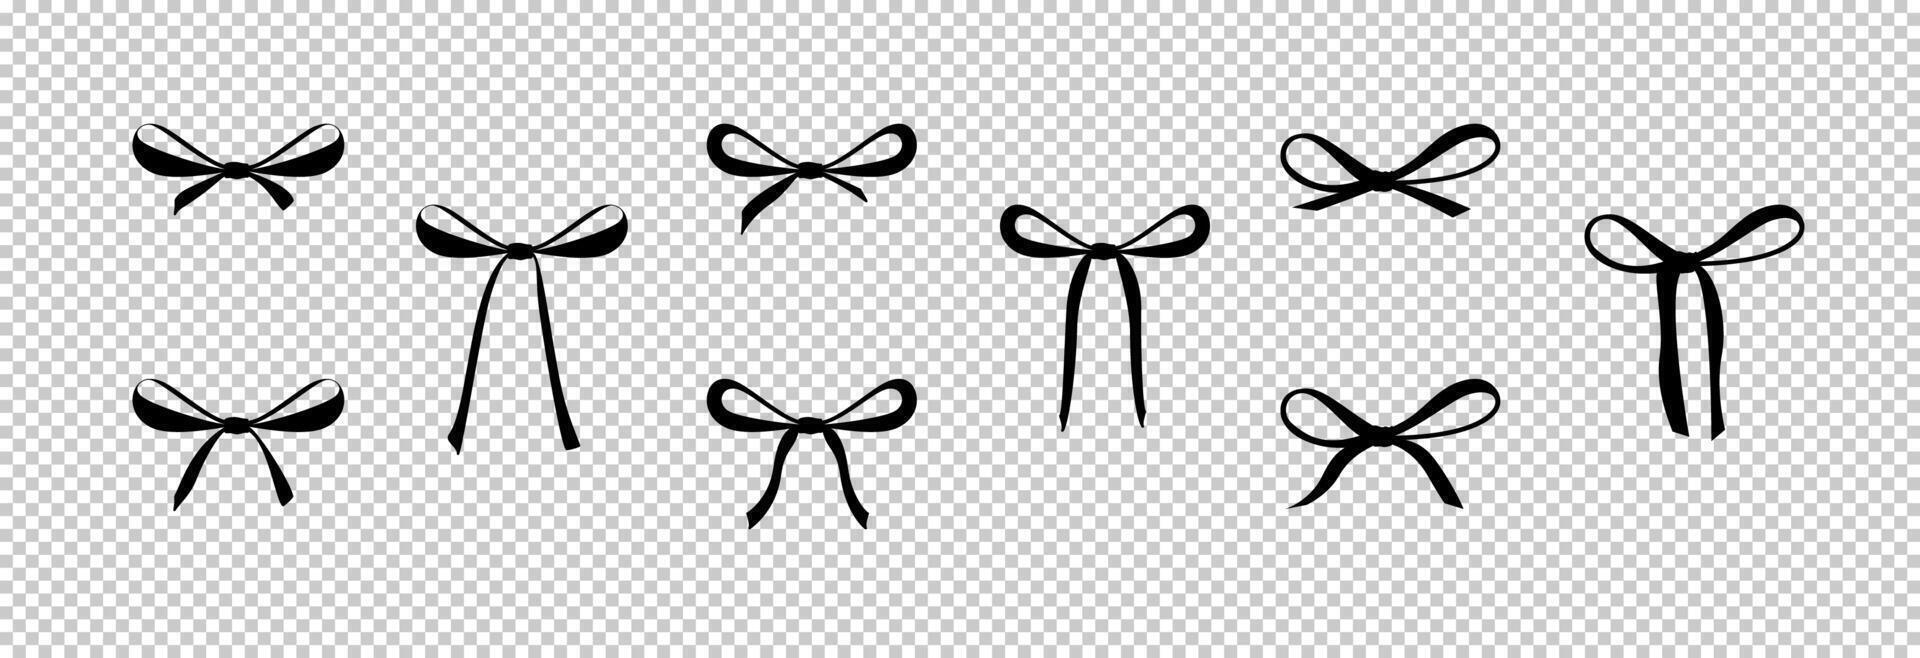 Decorative stylish bows. vector